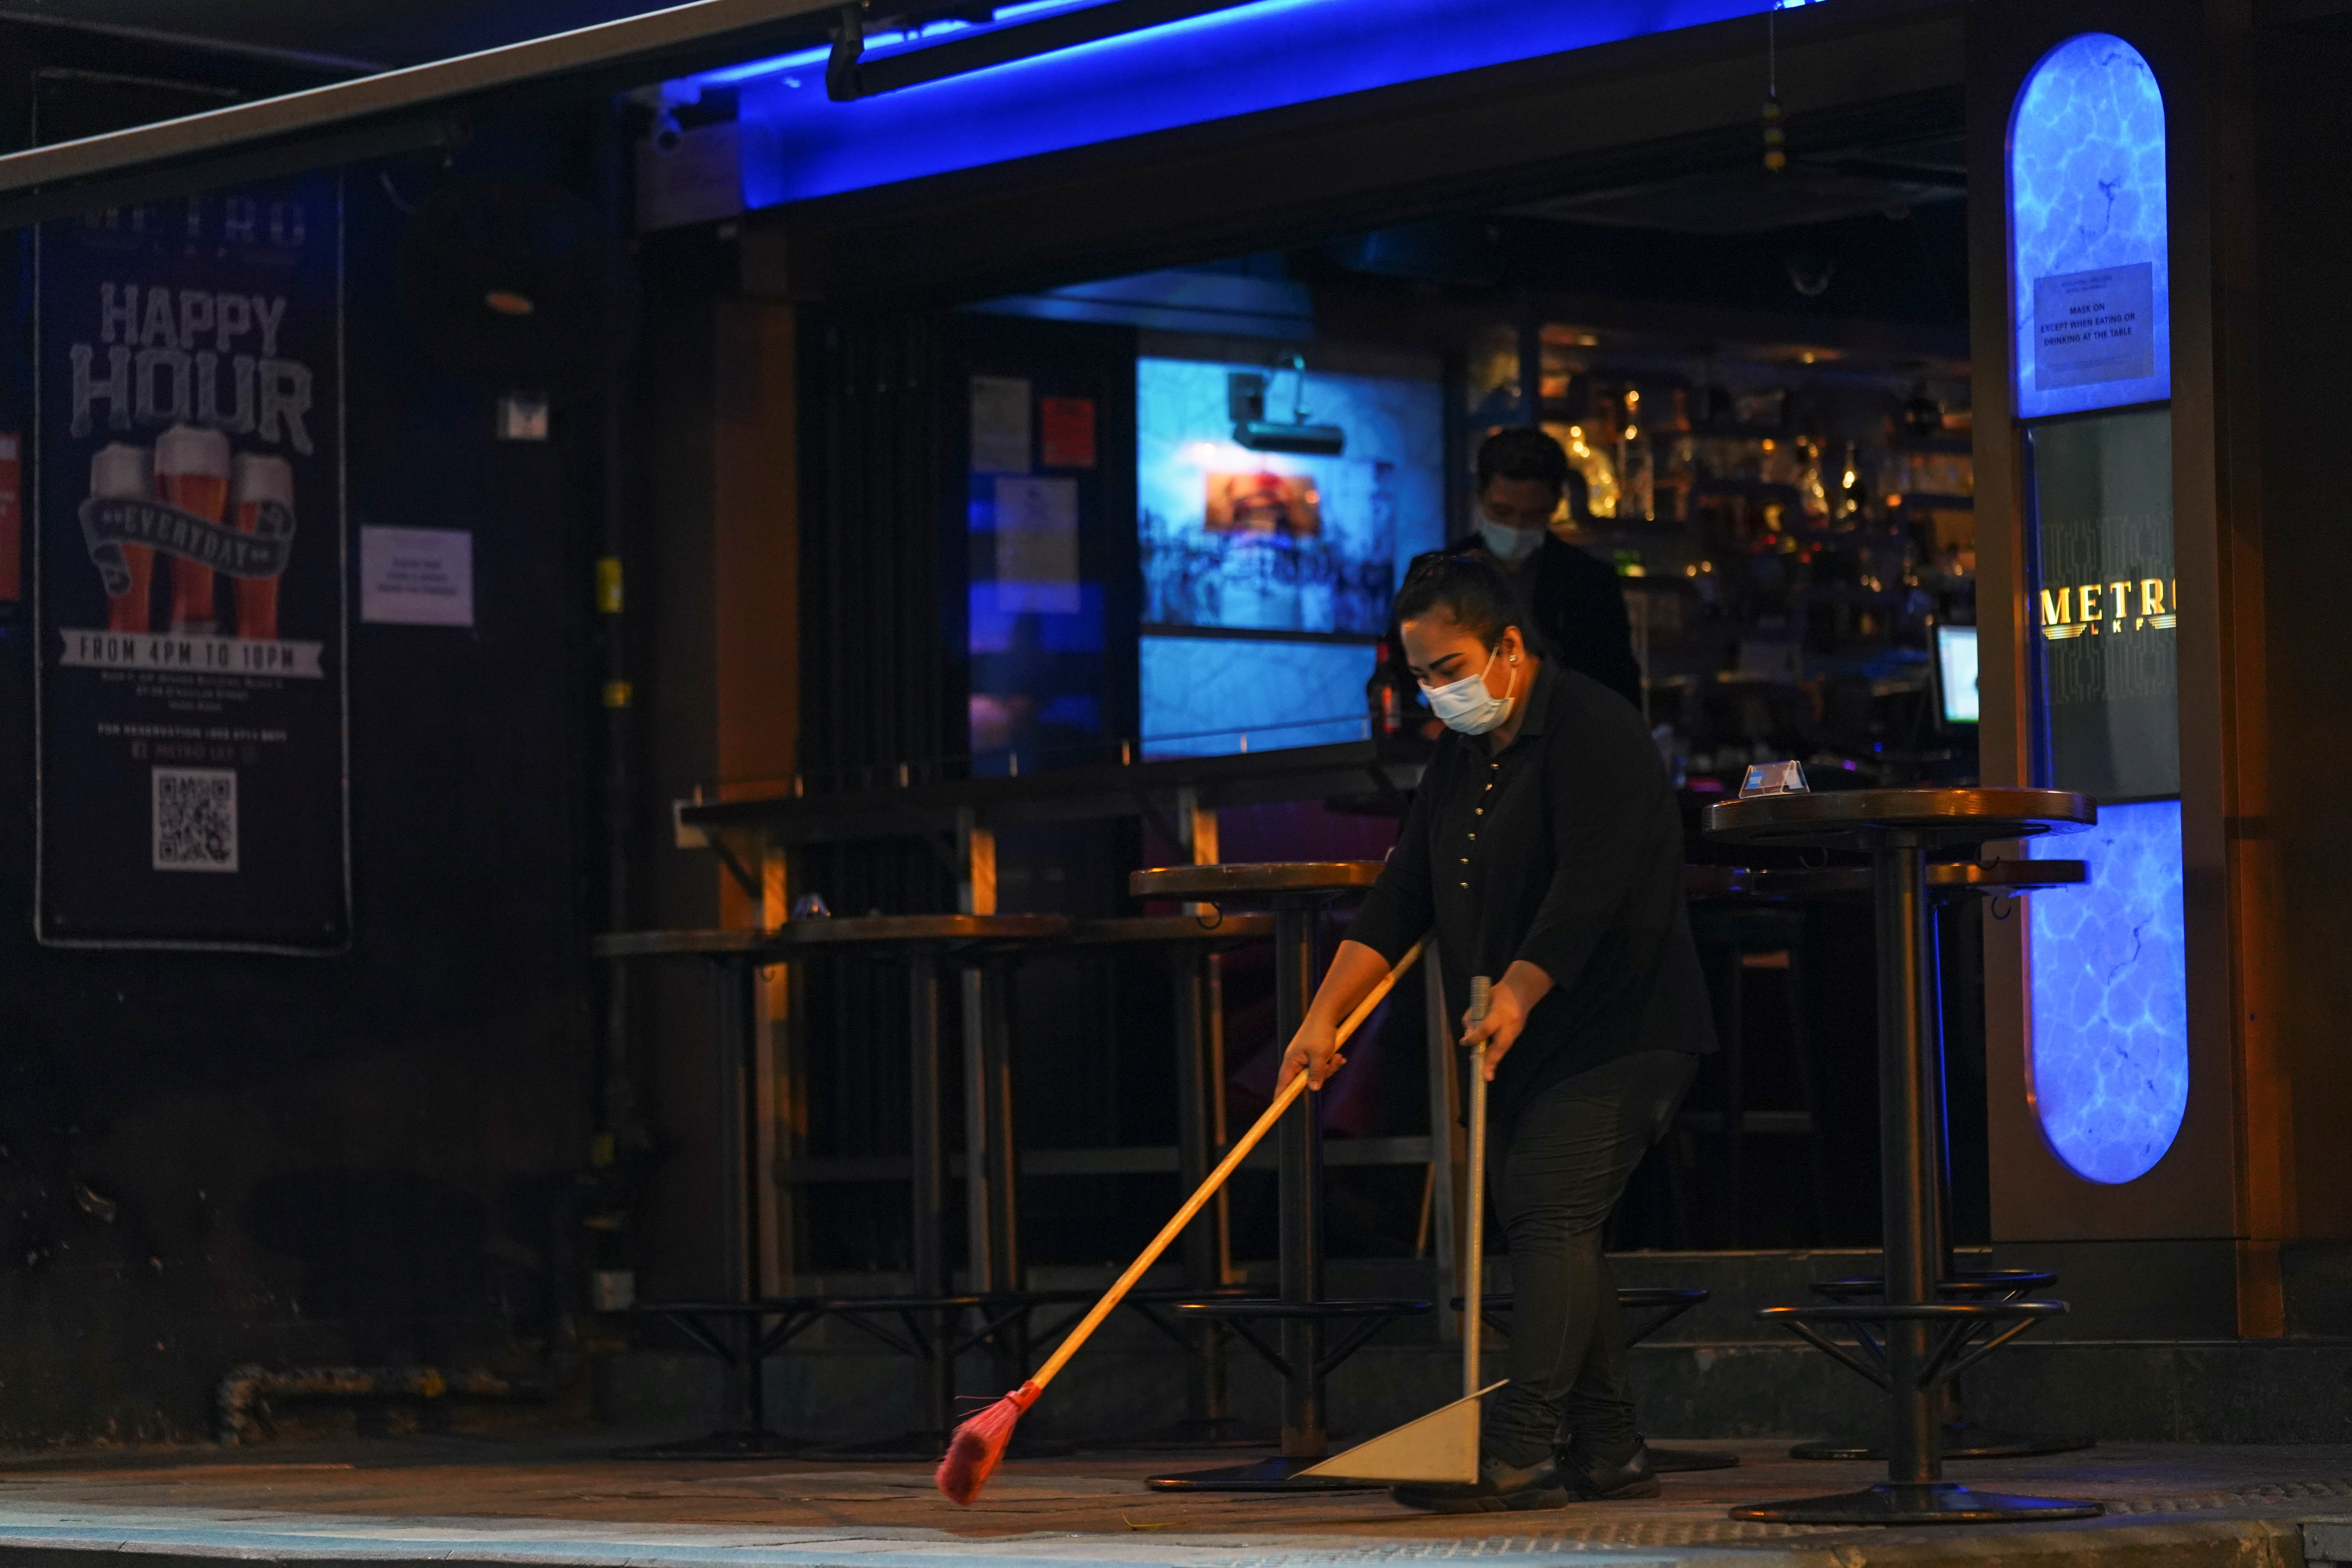 Staff cleans outside a bar in Hong Kong's Lan Kwai Fong